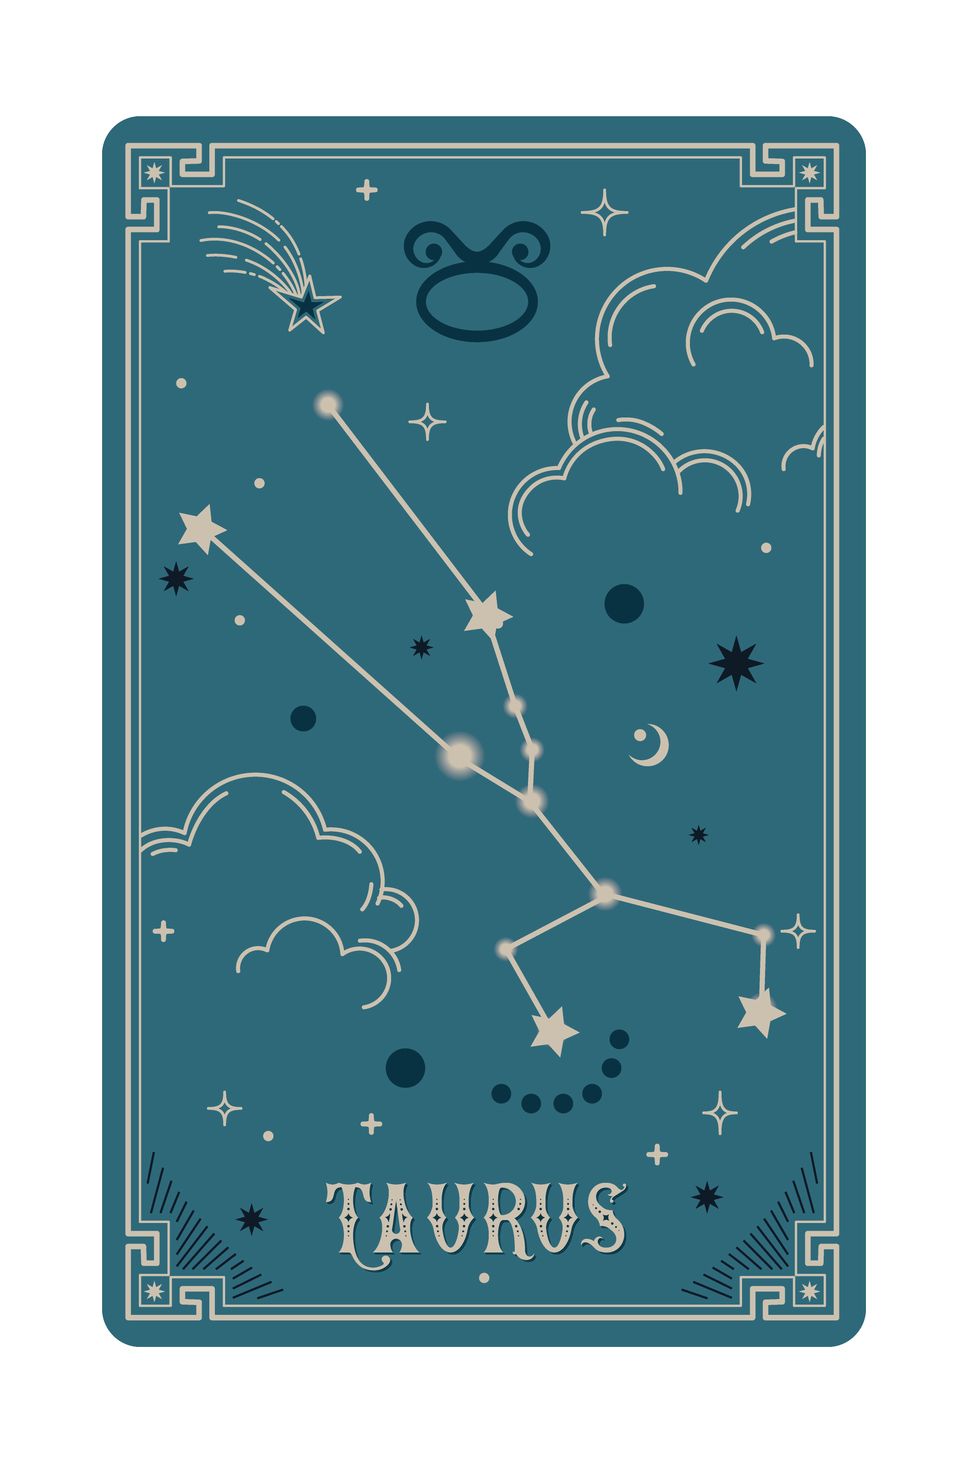 taurus virgo and gemini zodiac symbols